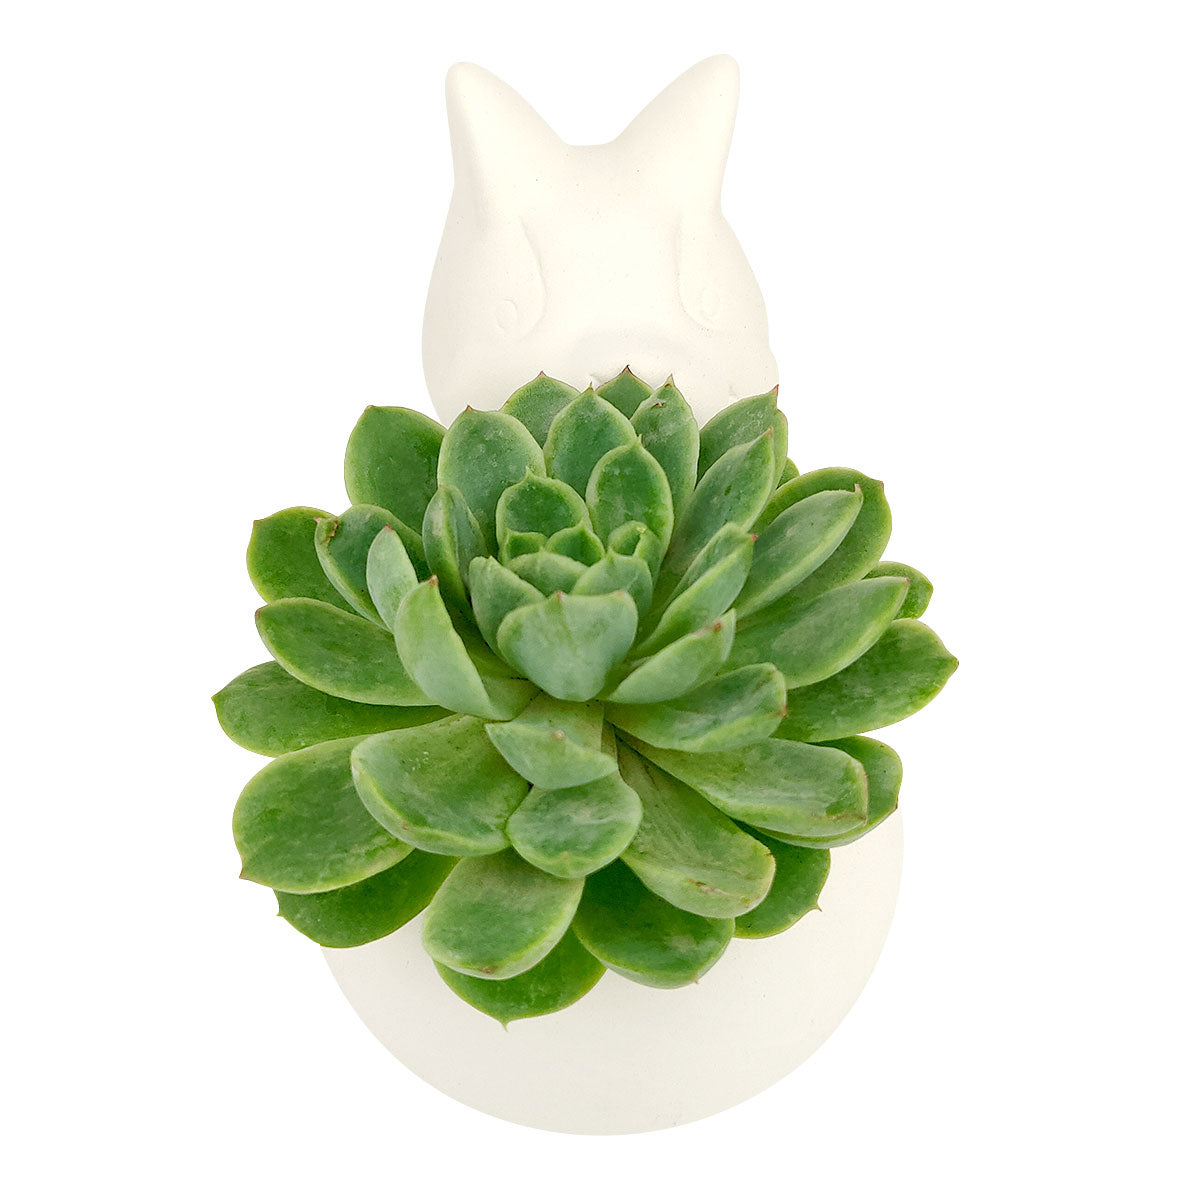 DIY Ceramic Kitty Pot for sale, White Ceramic Cat Planter Pot, Unique Succulent Gift, craft supplies, cat shaped planter pot, succulent pot plant pot DIY pot